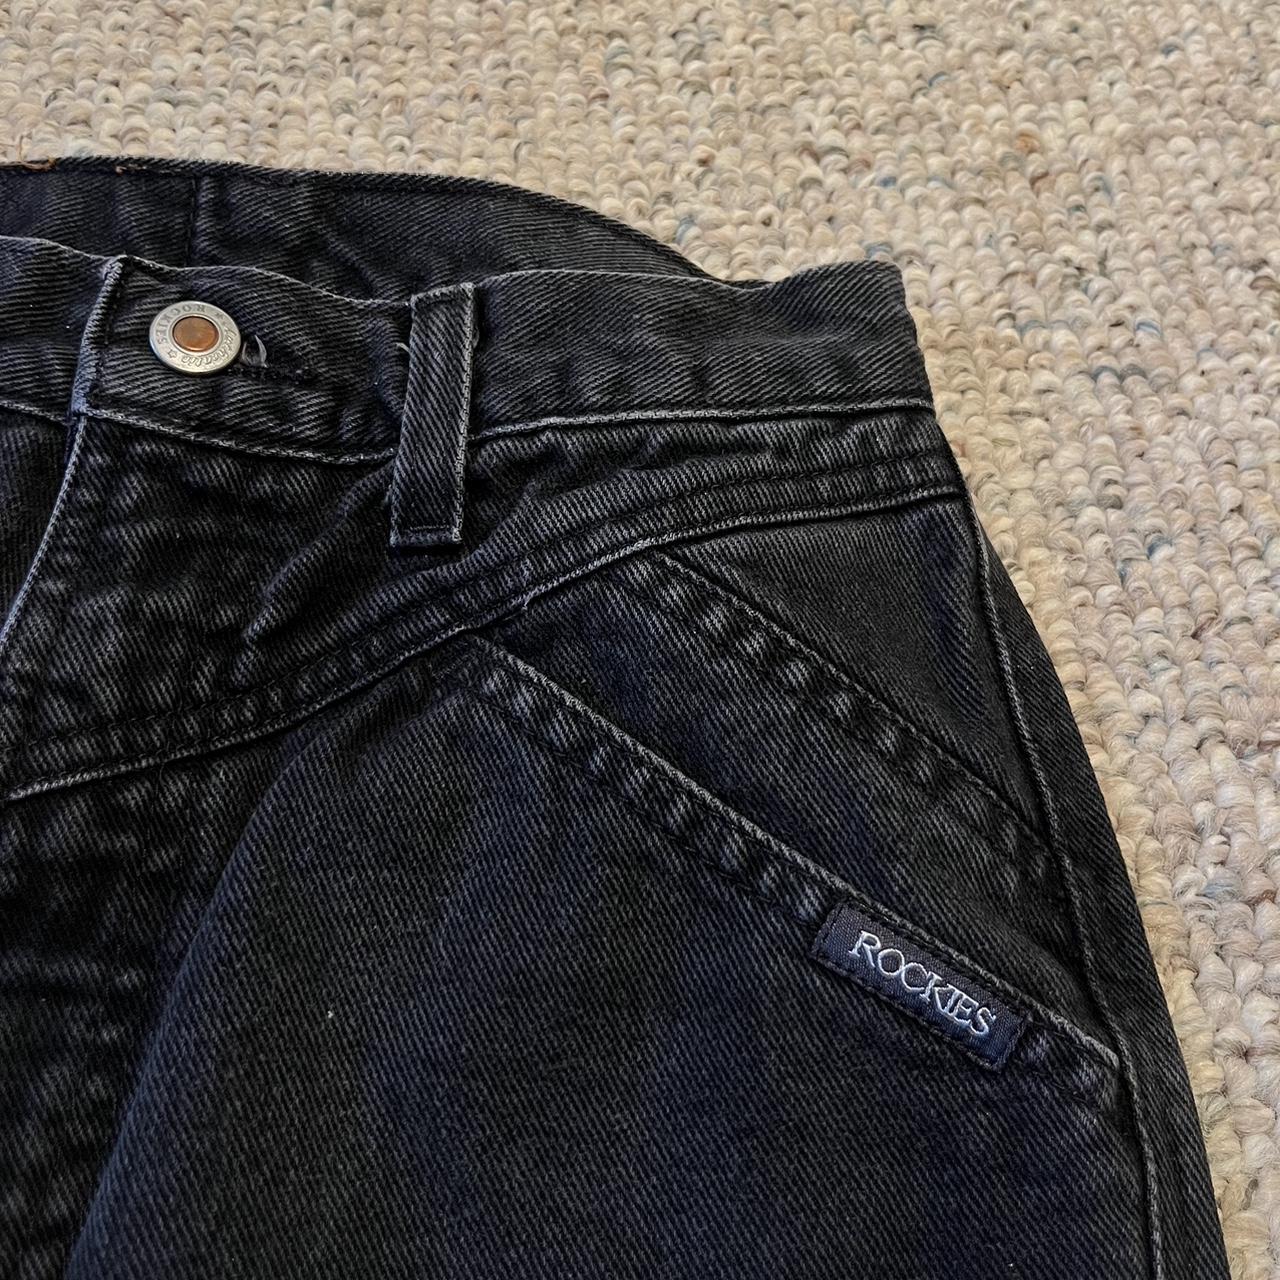 Rockies Vintage Denim Jeans Authentic Colorado Made... - Depop